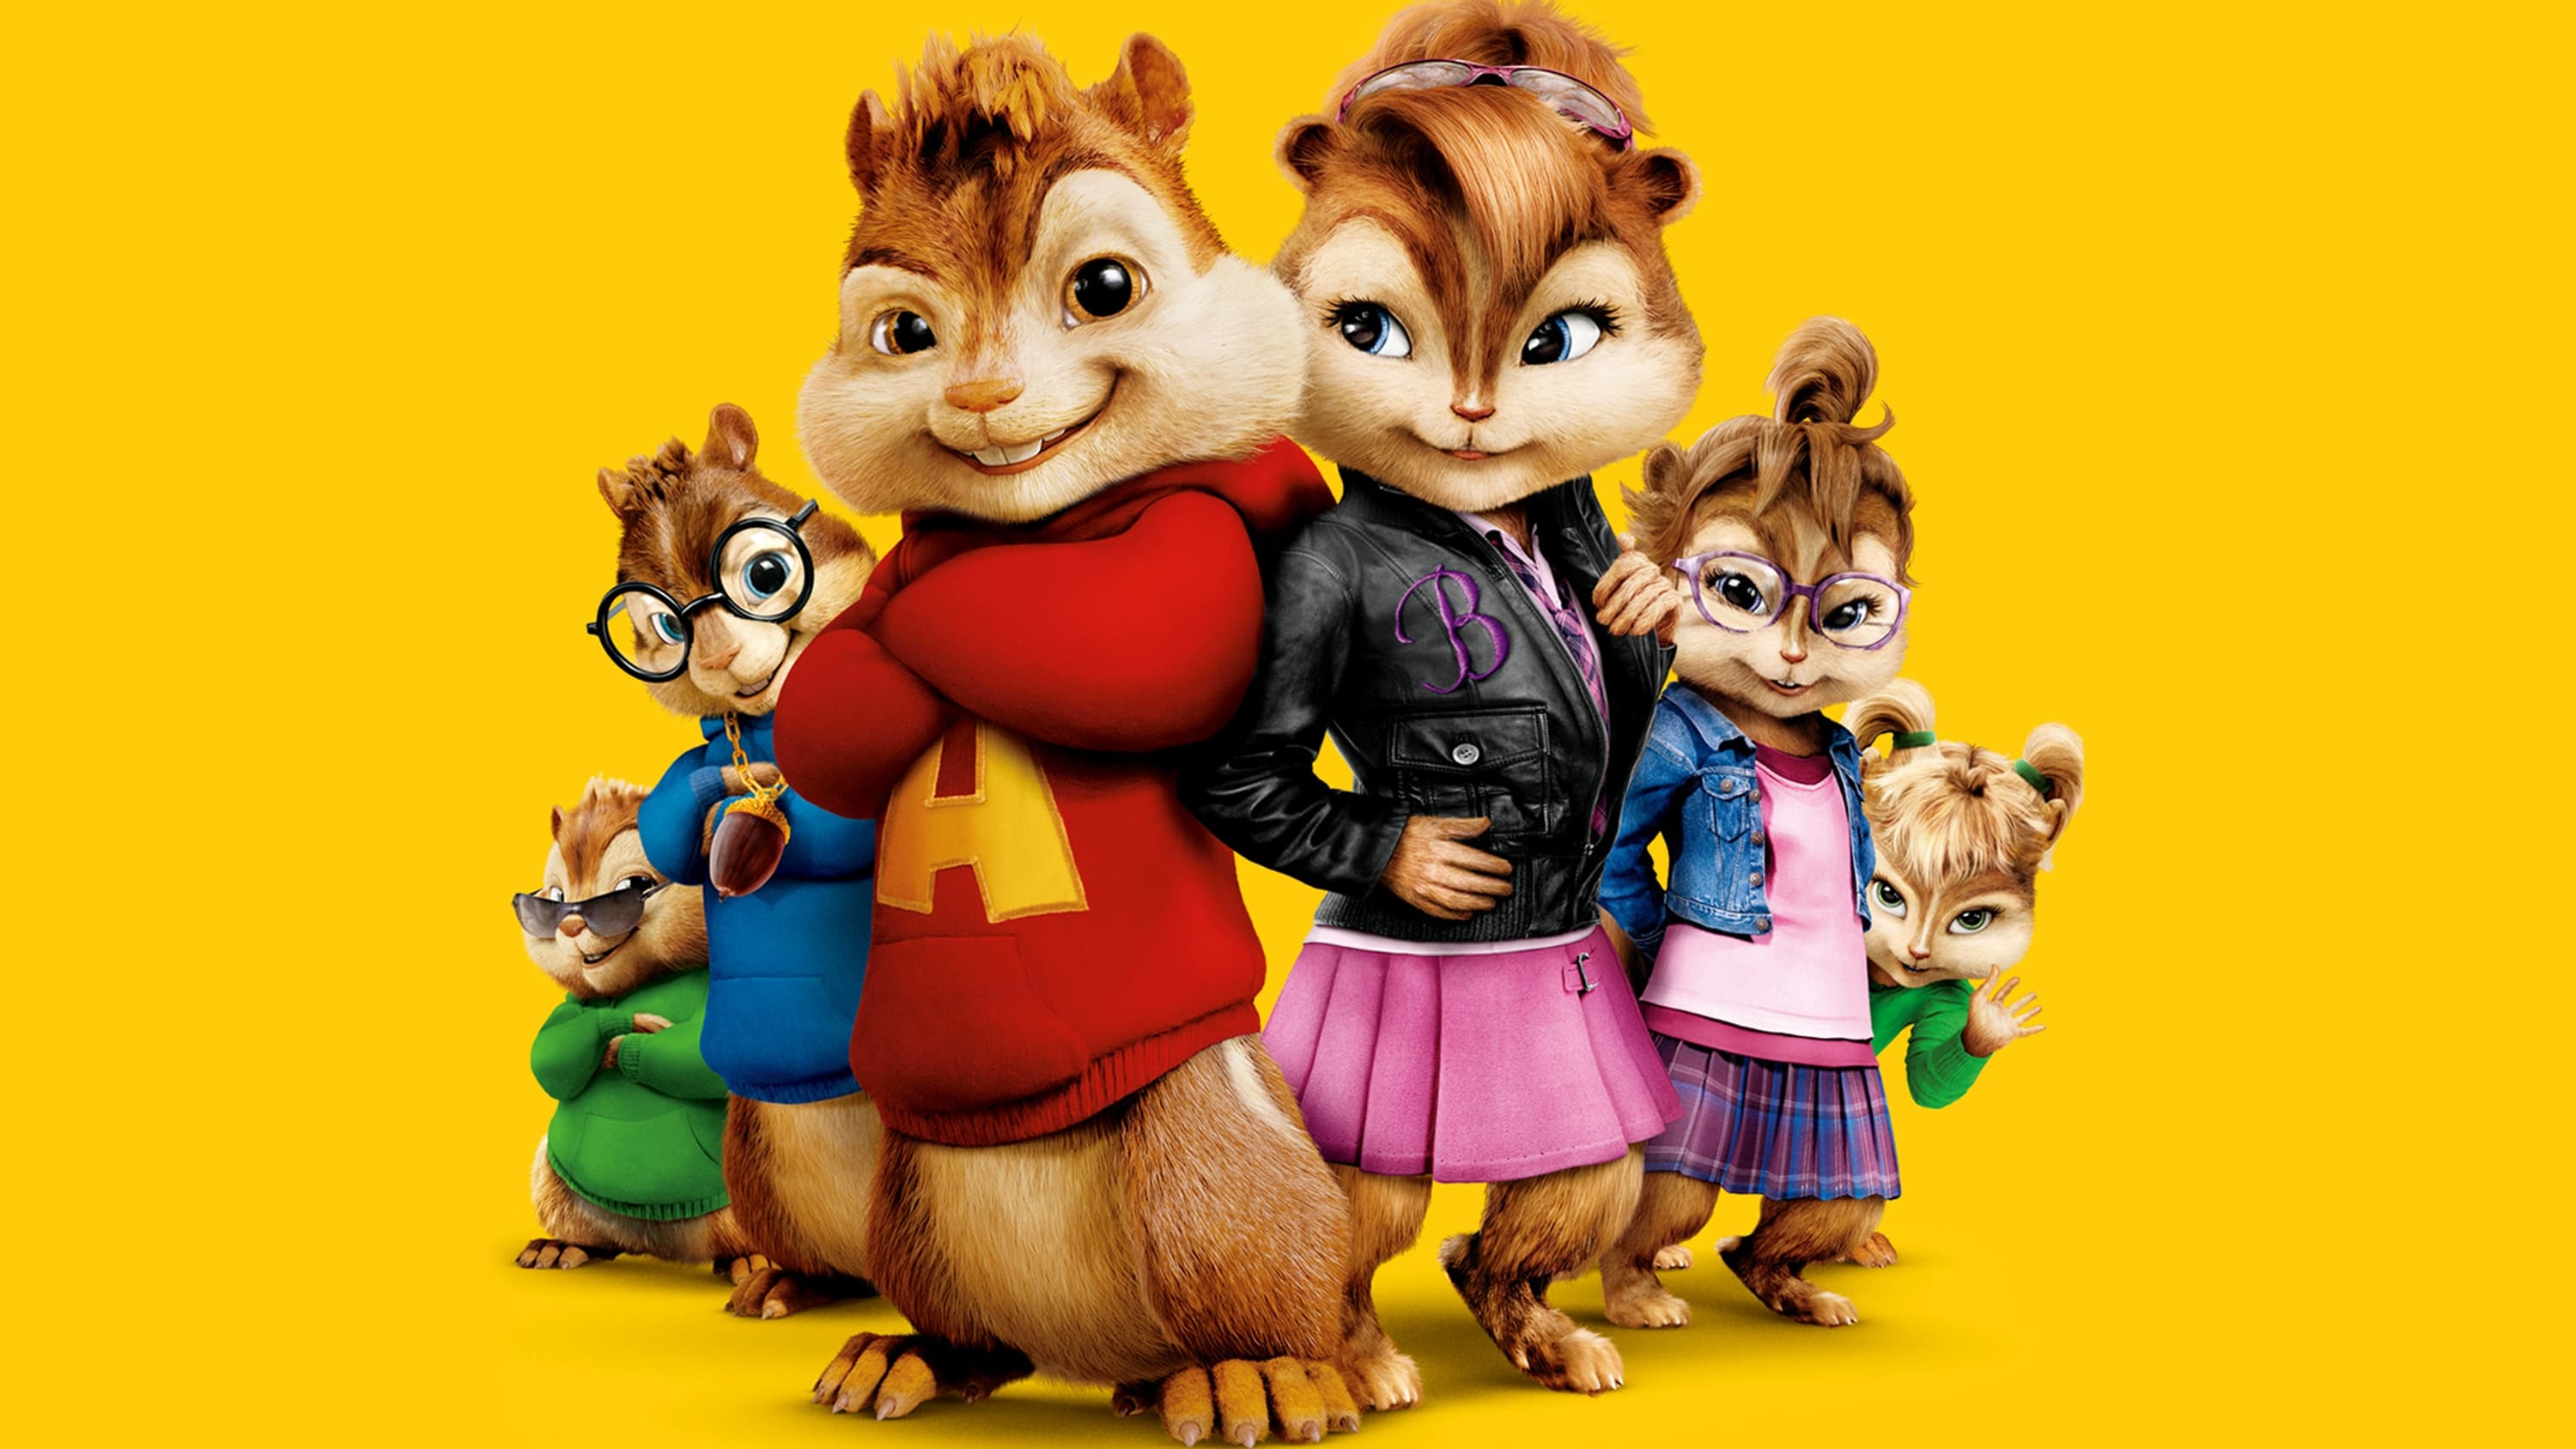 Xem Phim Sóc Siêu Quậy 2 (Alvin and the Chipmunks: The Squeakquel)